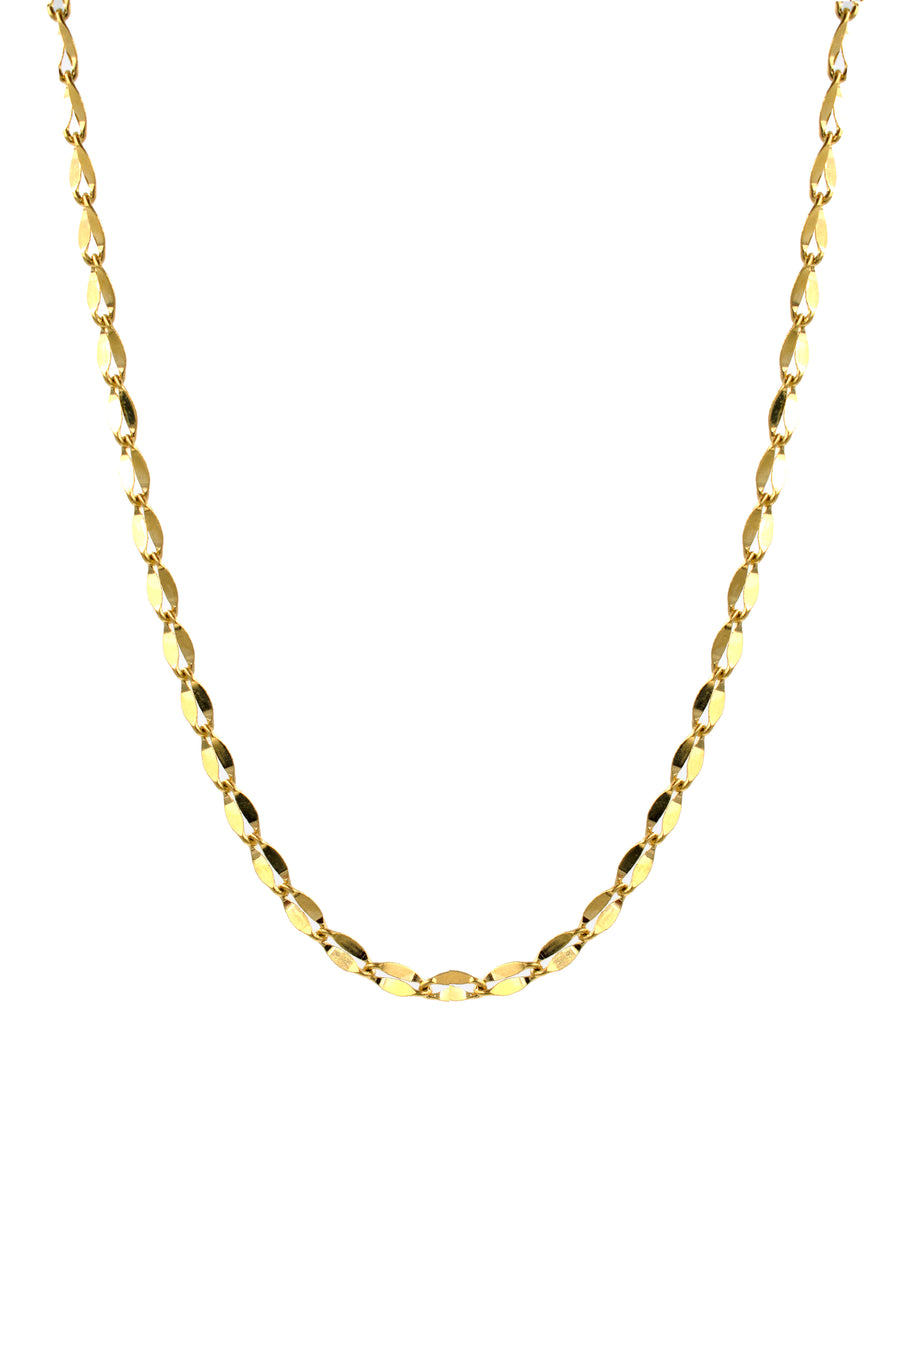 Tiffany Chain Necklace